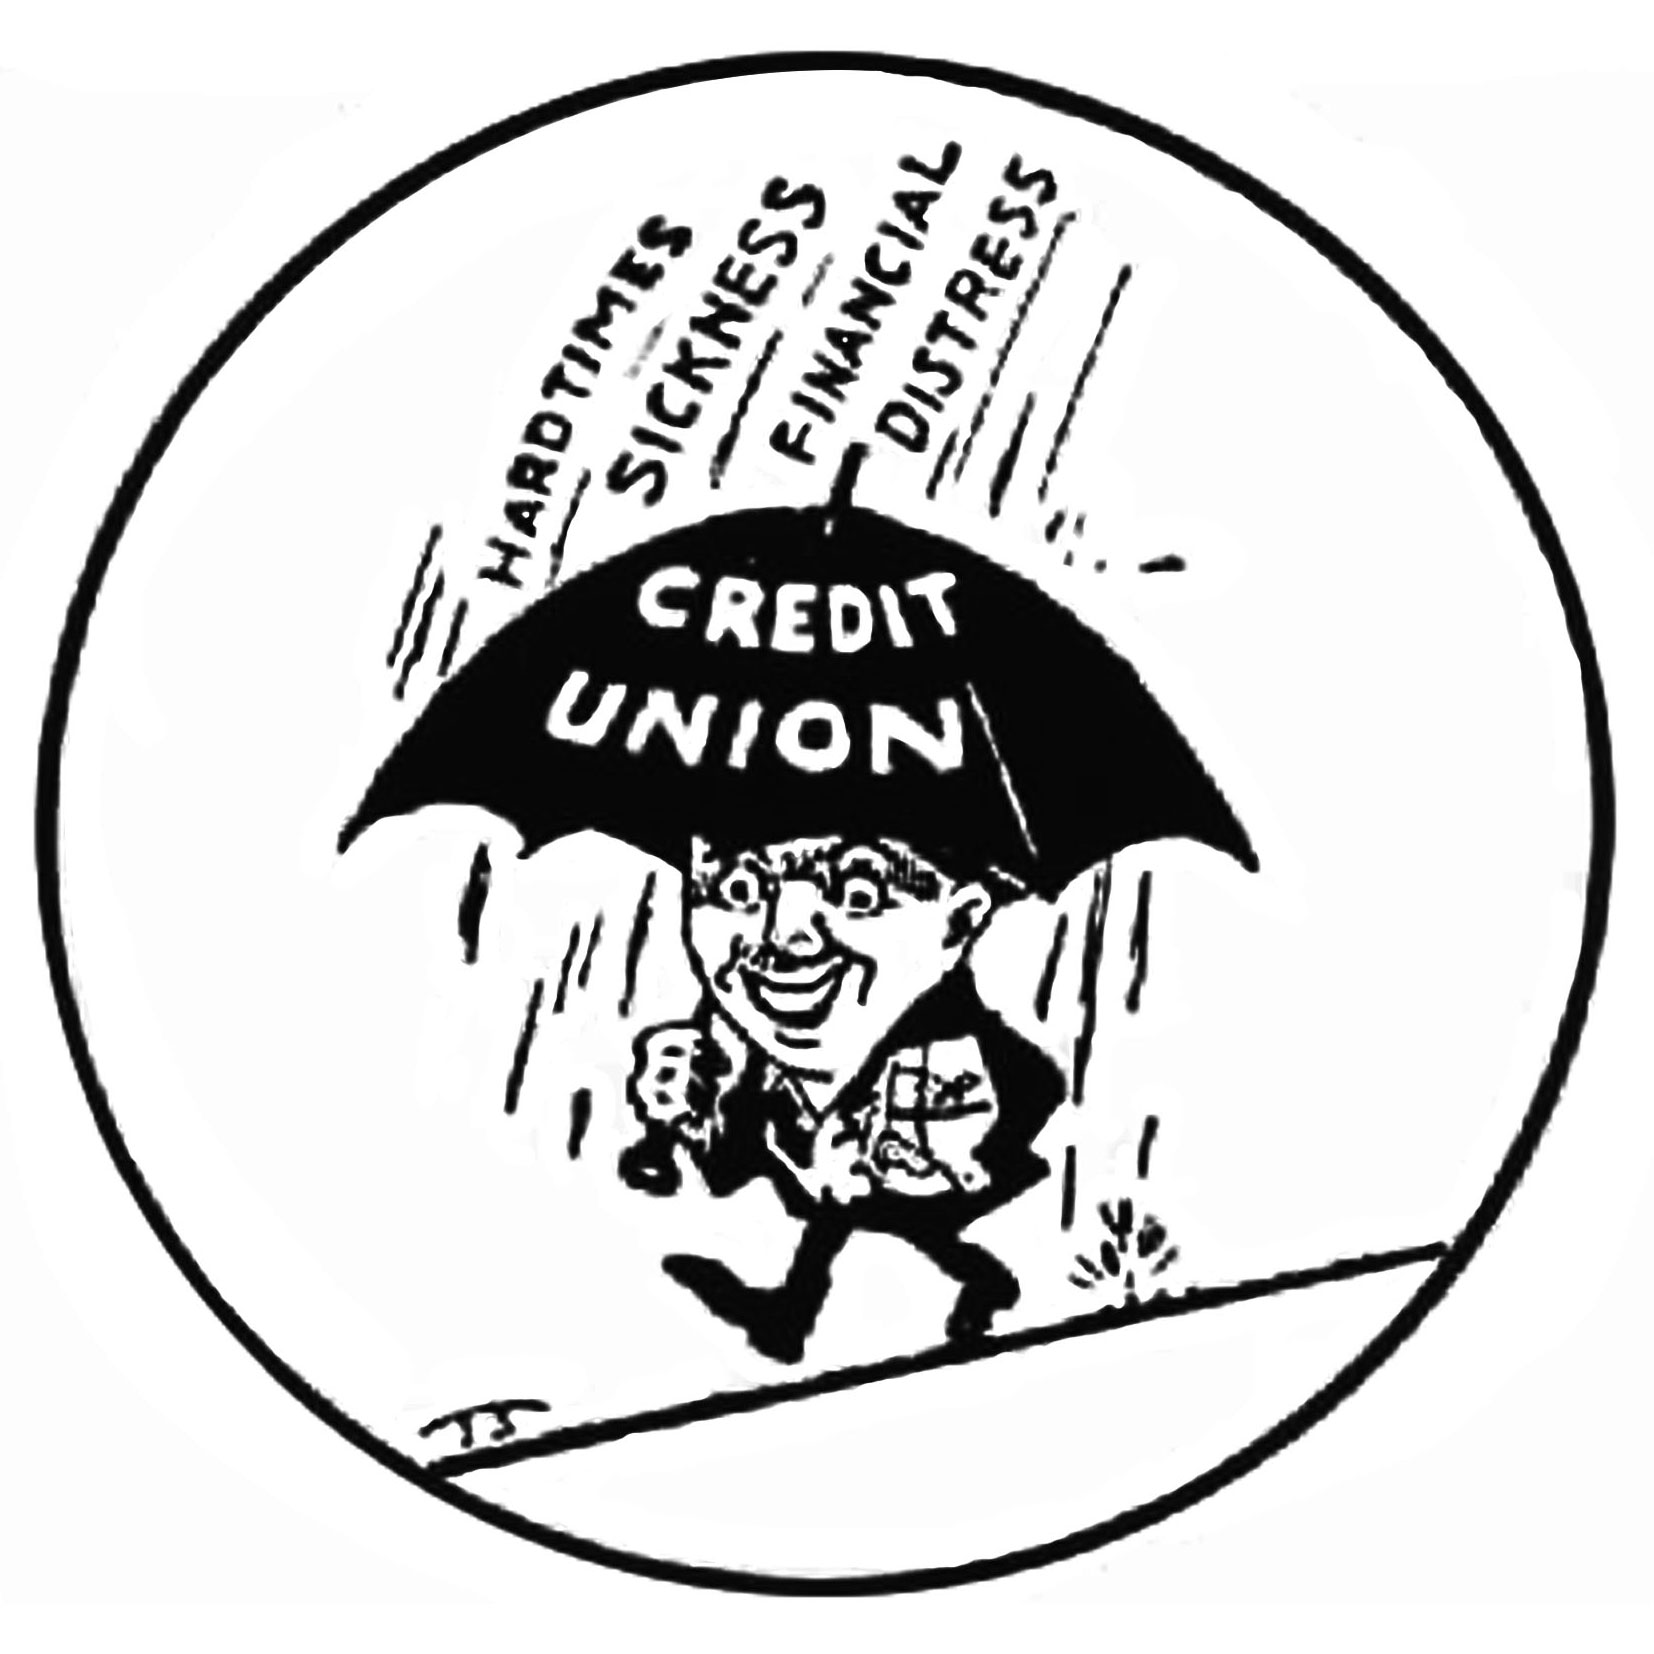 Credit Union Umbrella Man